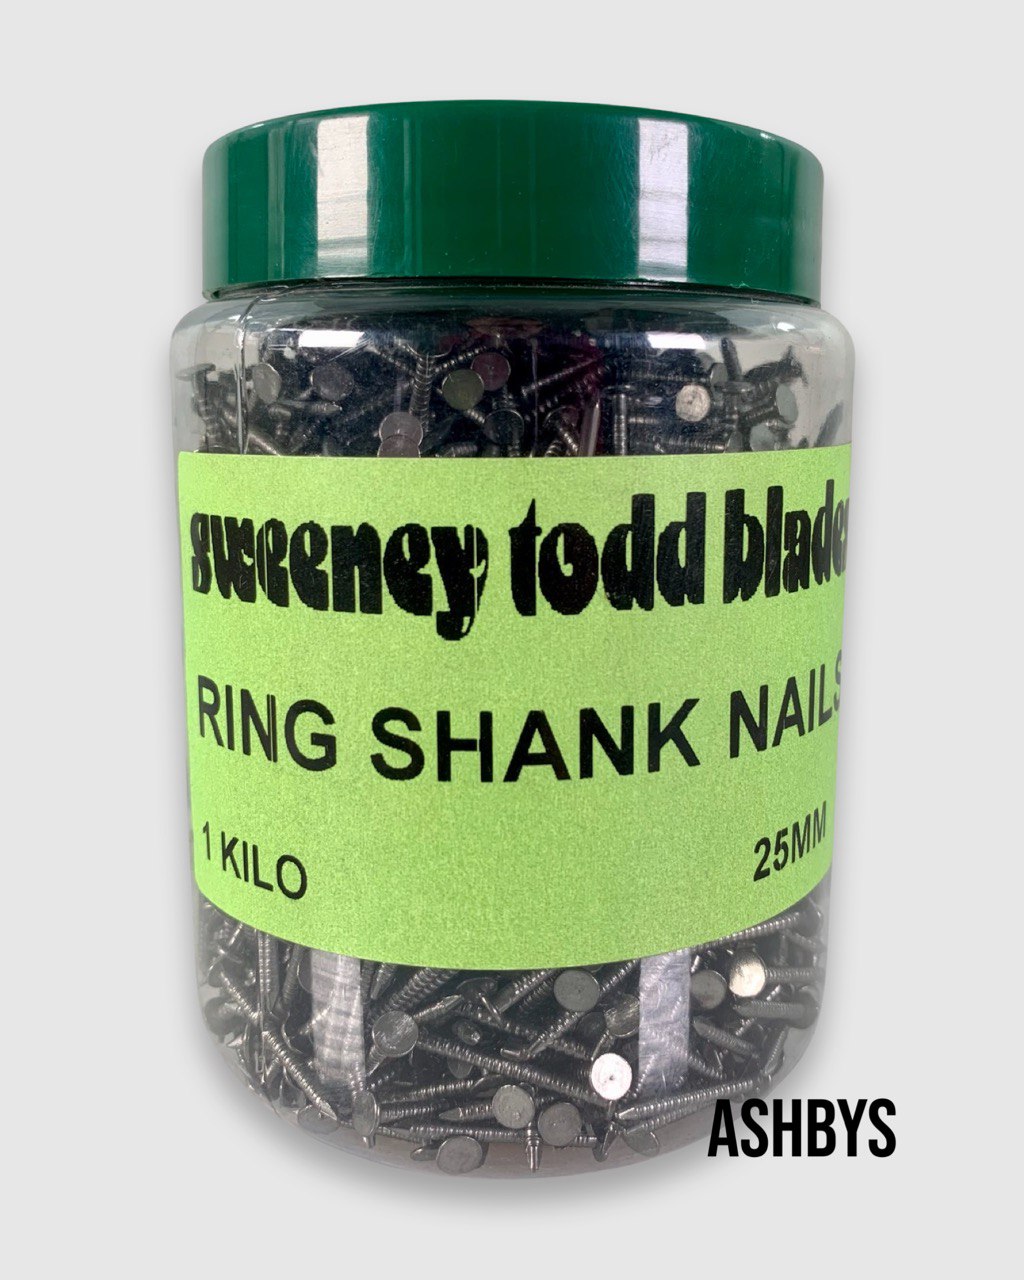 Sweeney Todd Blades Ring Shank Nails 25mm - 1 Kilo